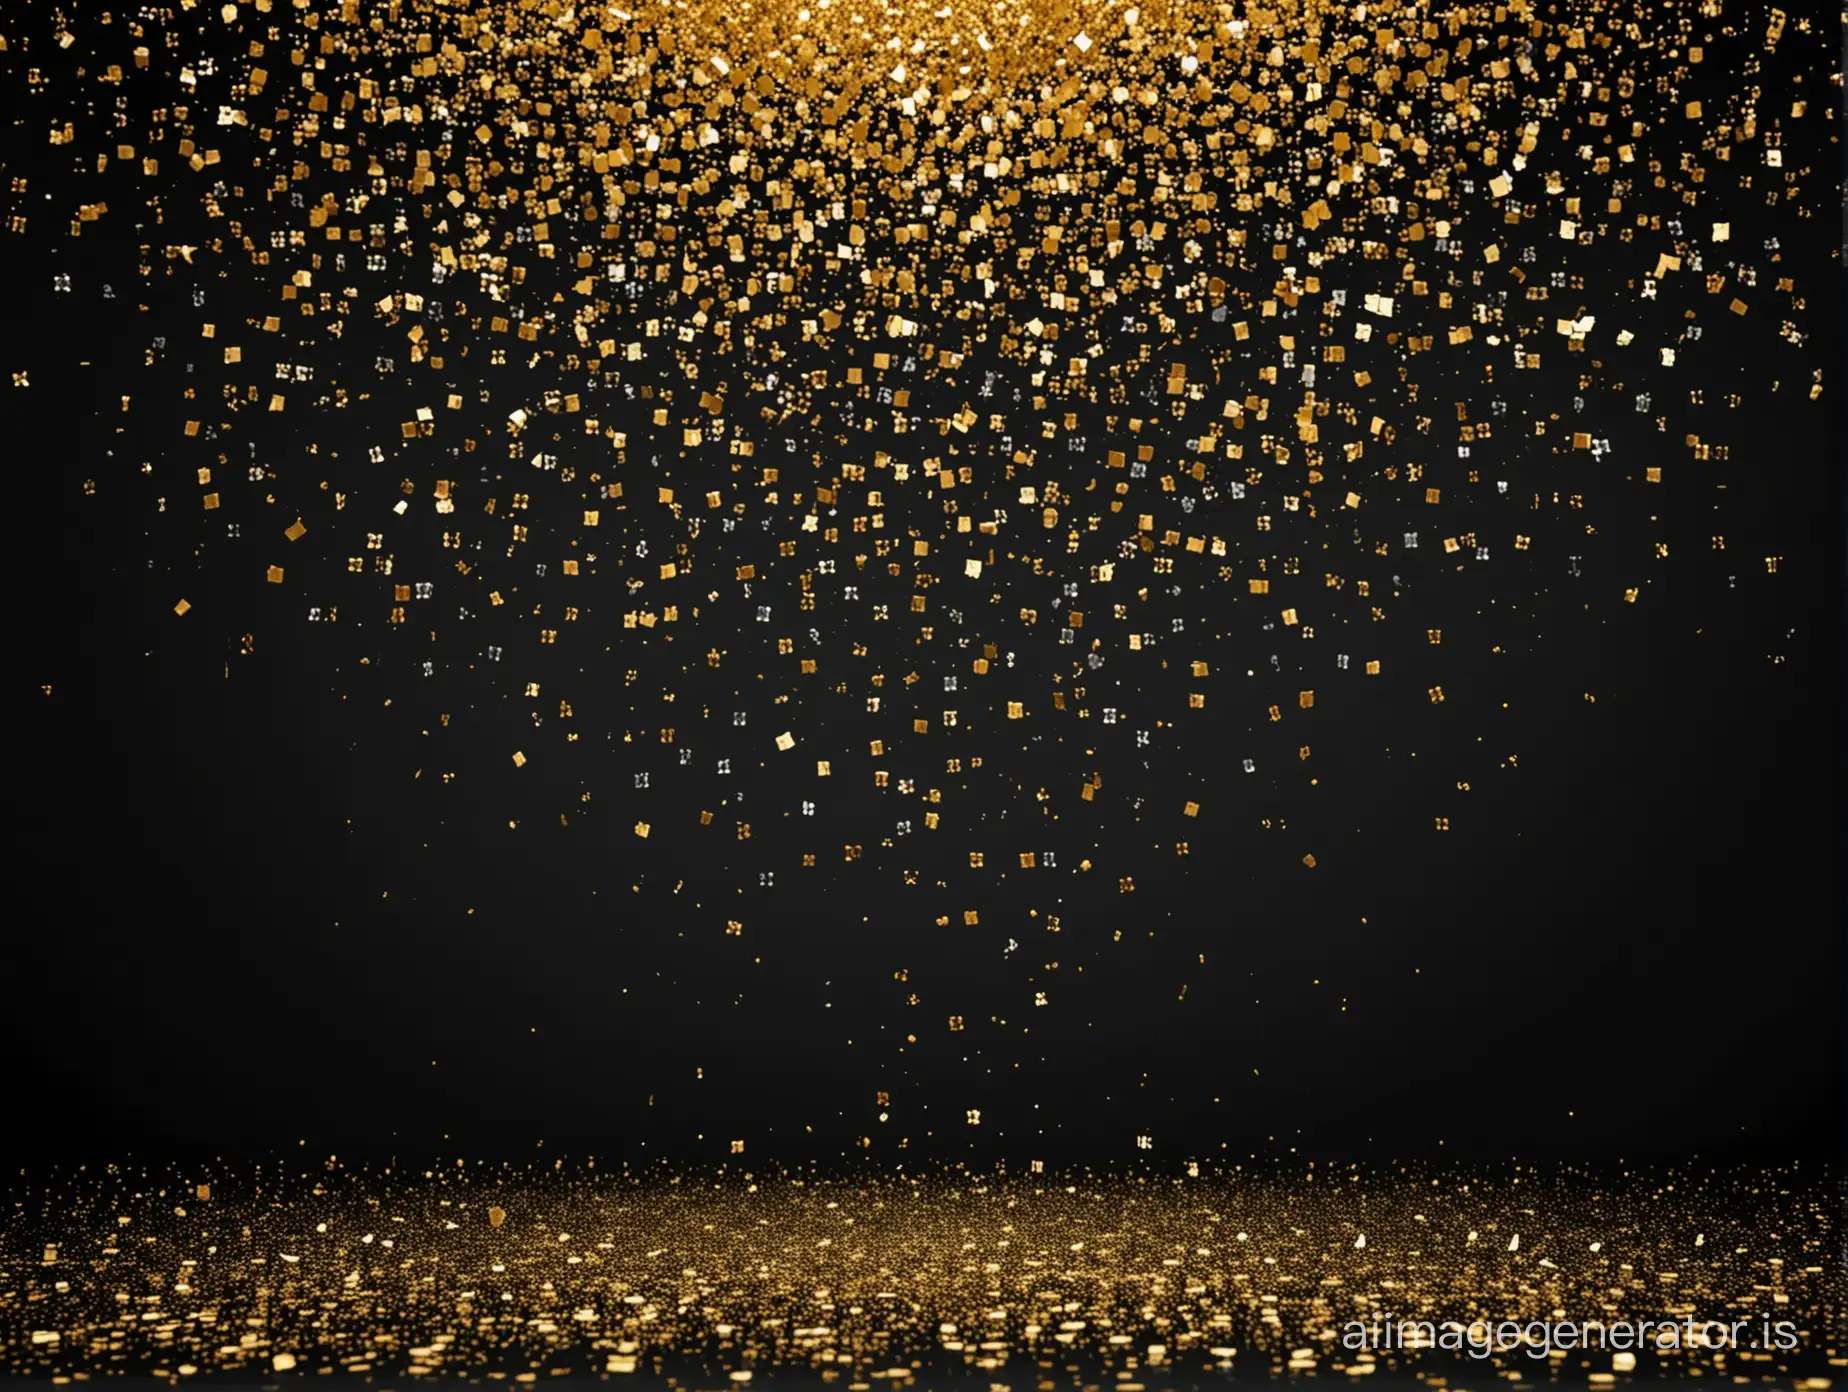 Vibrant-Golden-Confetti-Cascading-Against-Black-Background